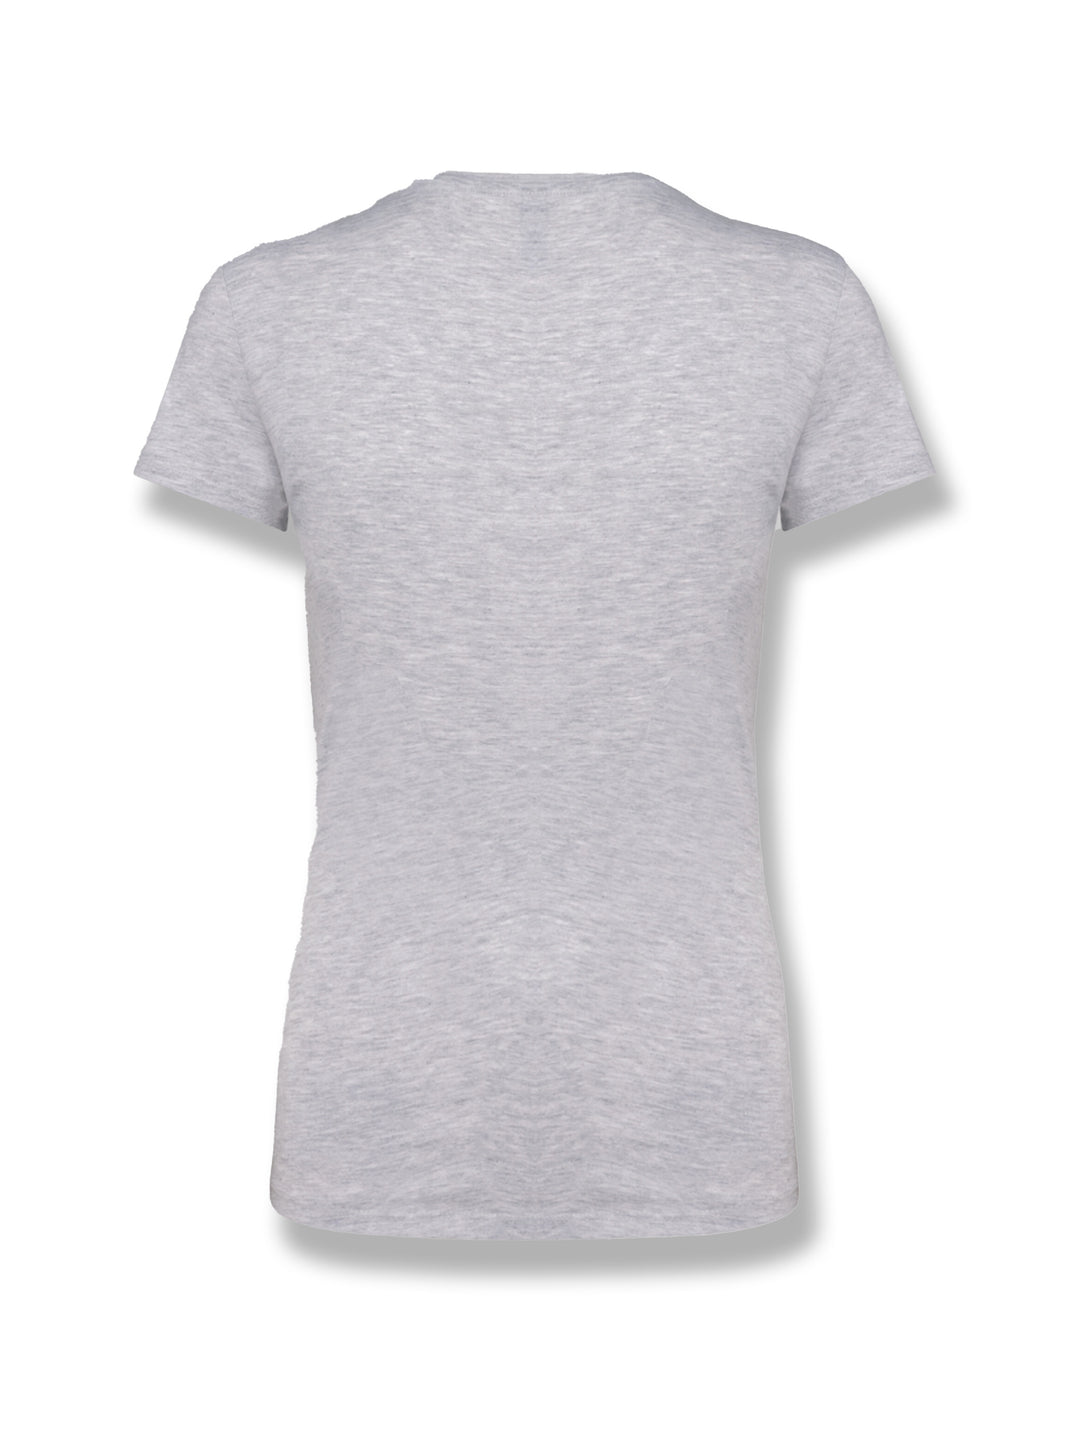 T-Shirt Sport Coton - 2023 - Femme